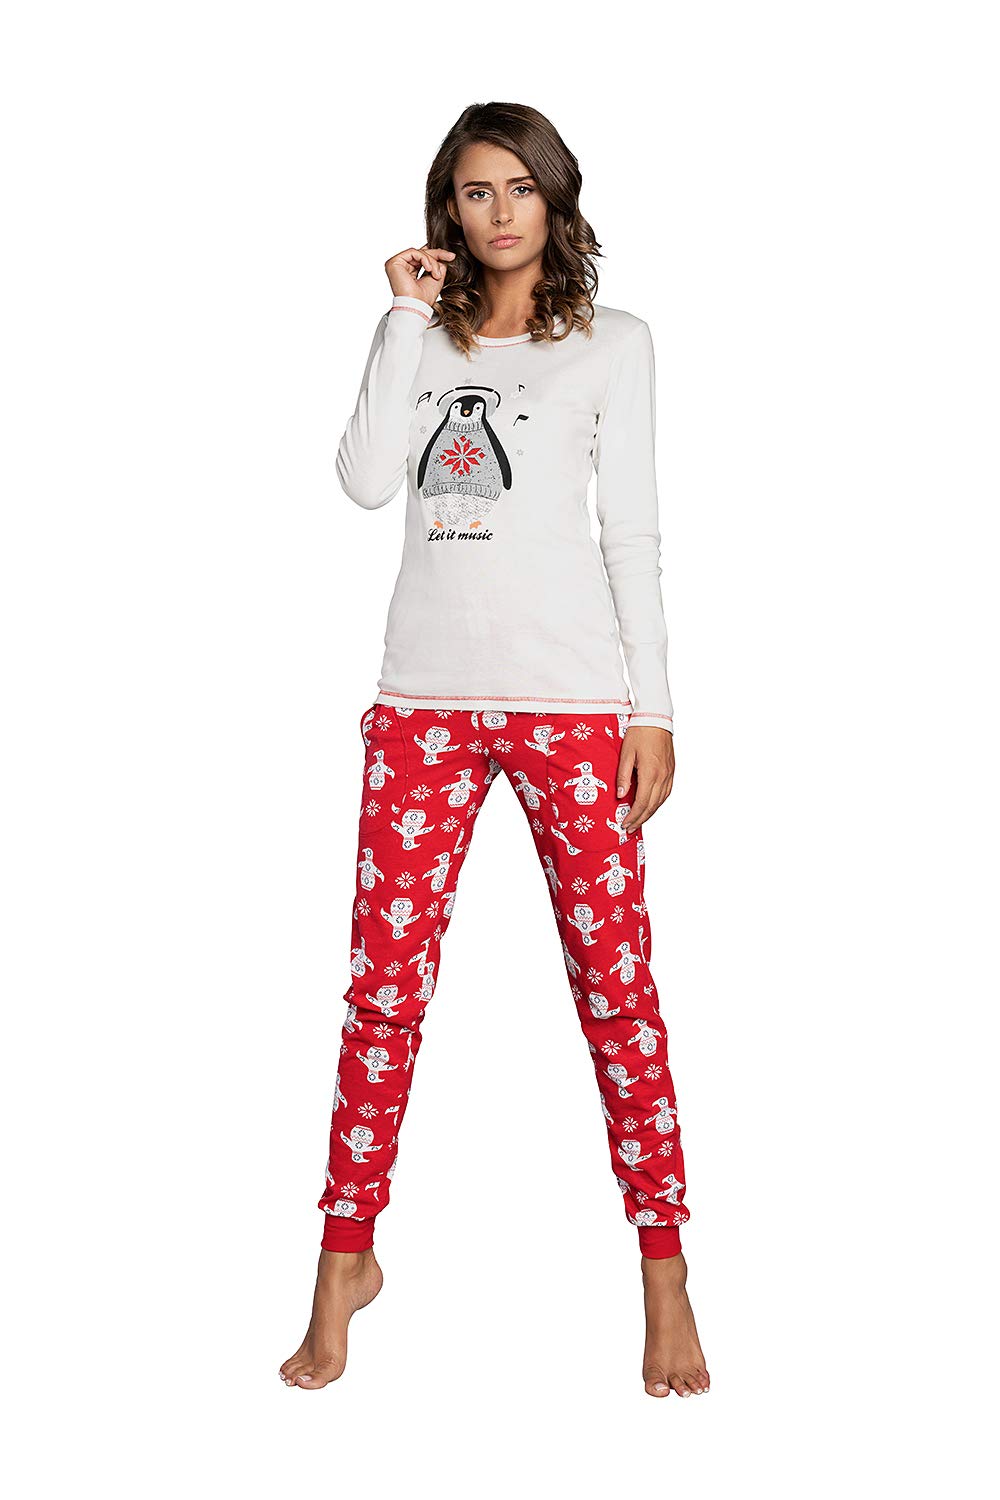 Damen Schlafanzug aus Baumwolle, Ladies’ Pyjama Set Long-Sleeved, Checked Pyjama Set, Night Wear, Soft and warm (L, Ecru/Muster)